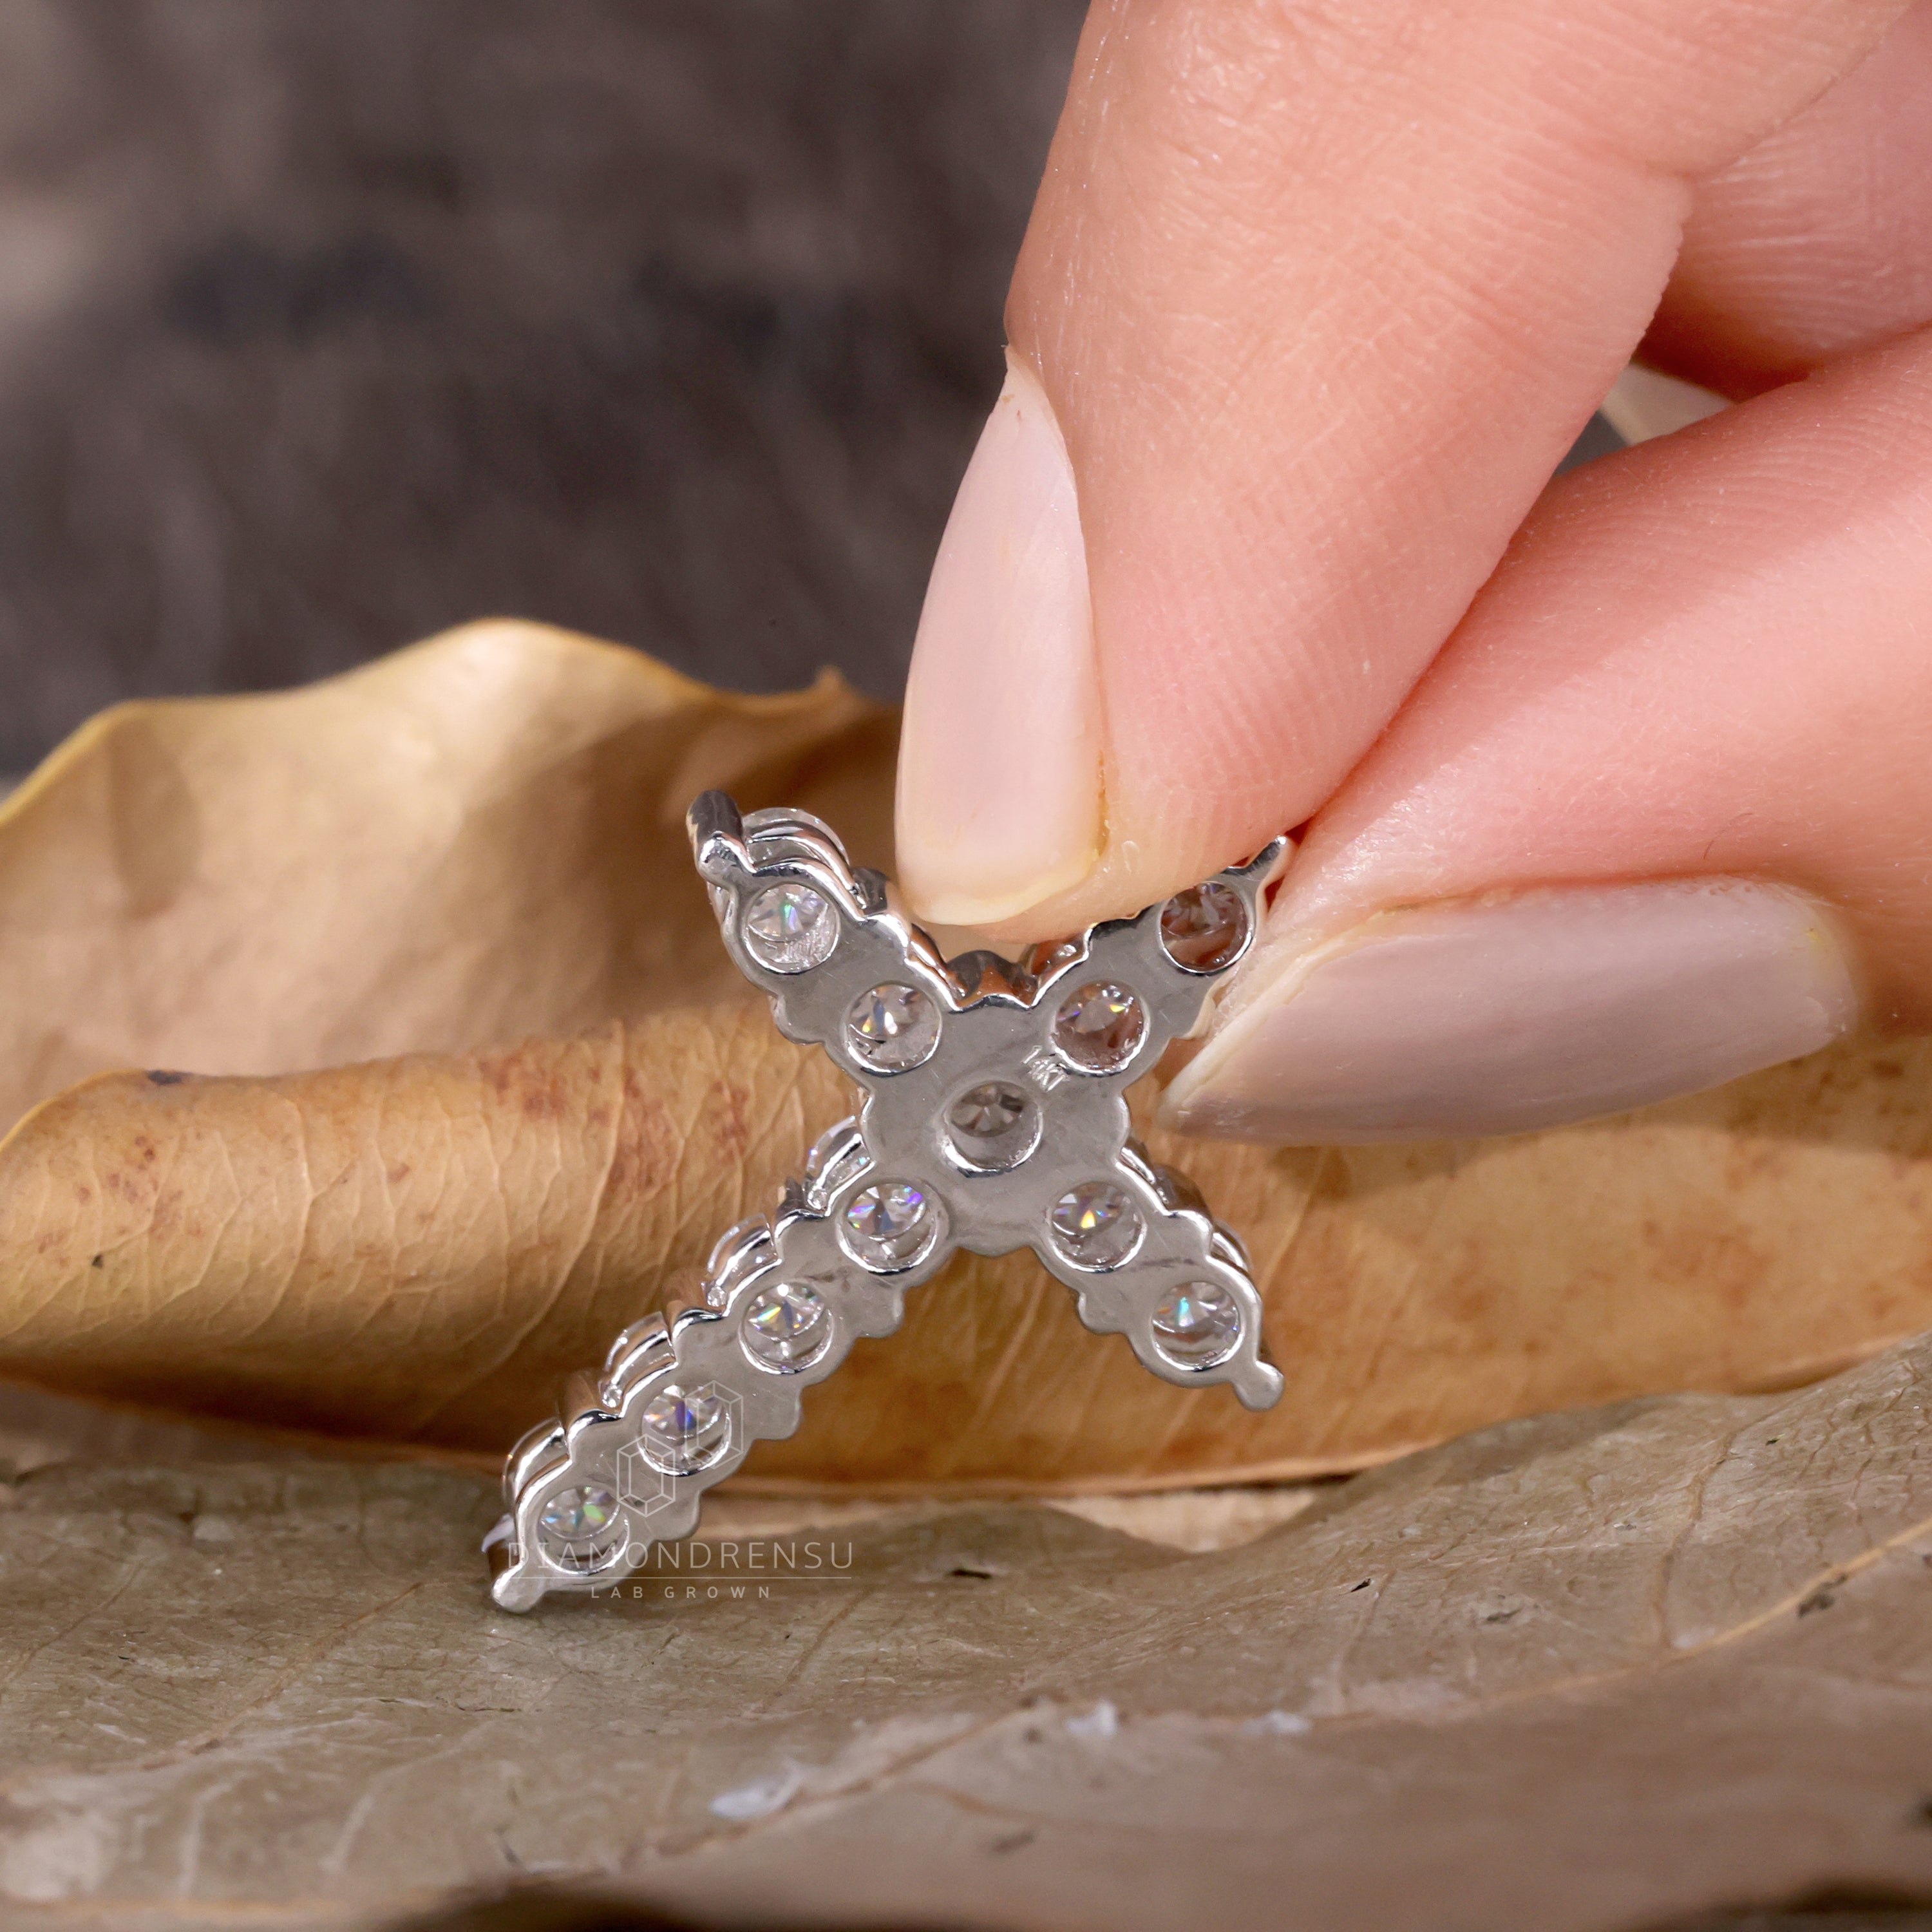 Diamond Cross Necklace – Meira T Boutique